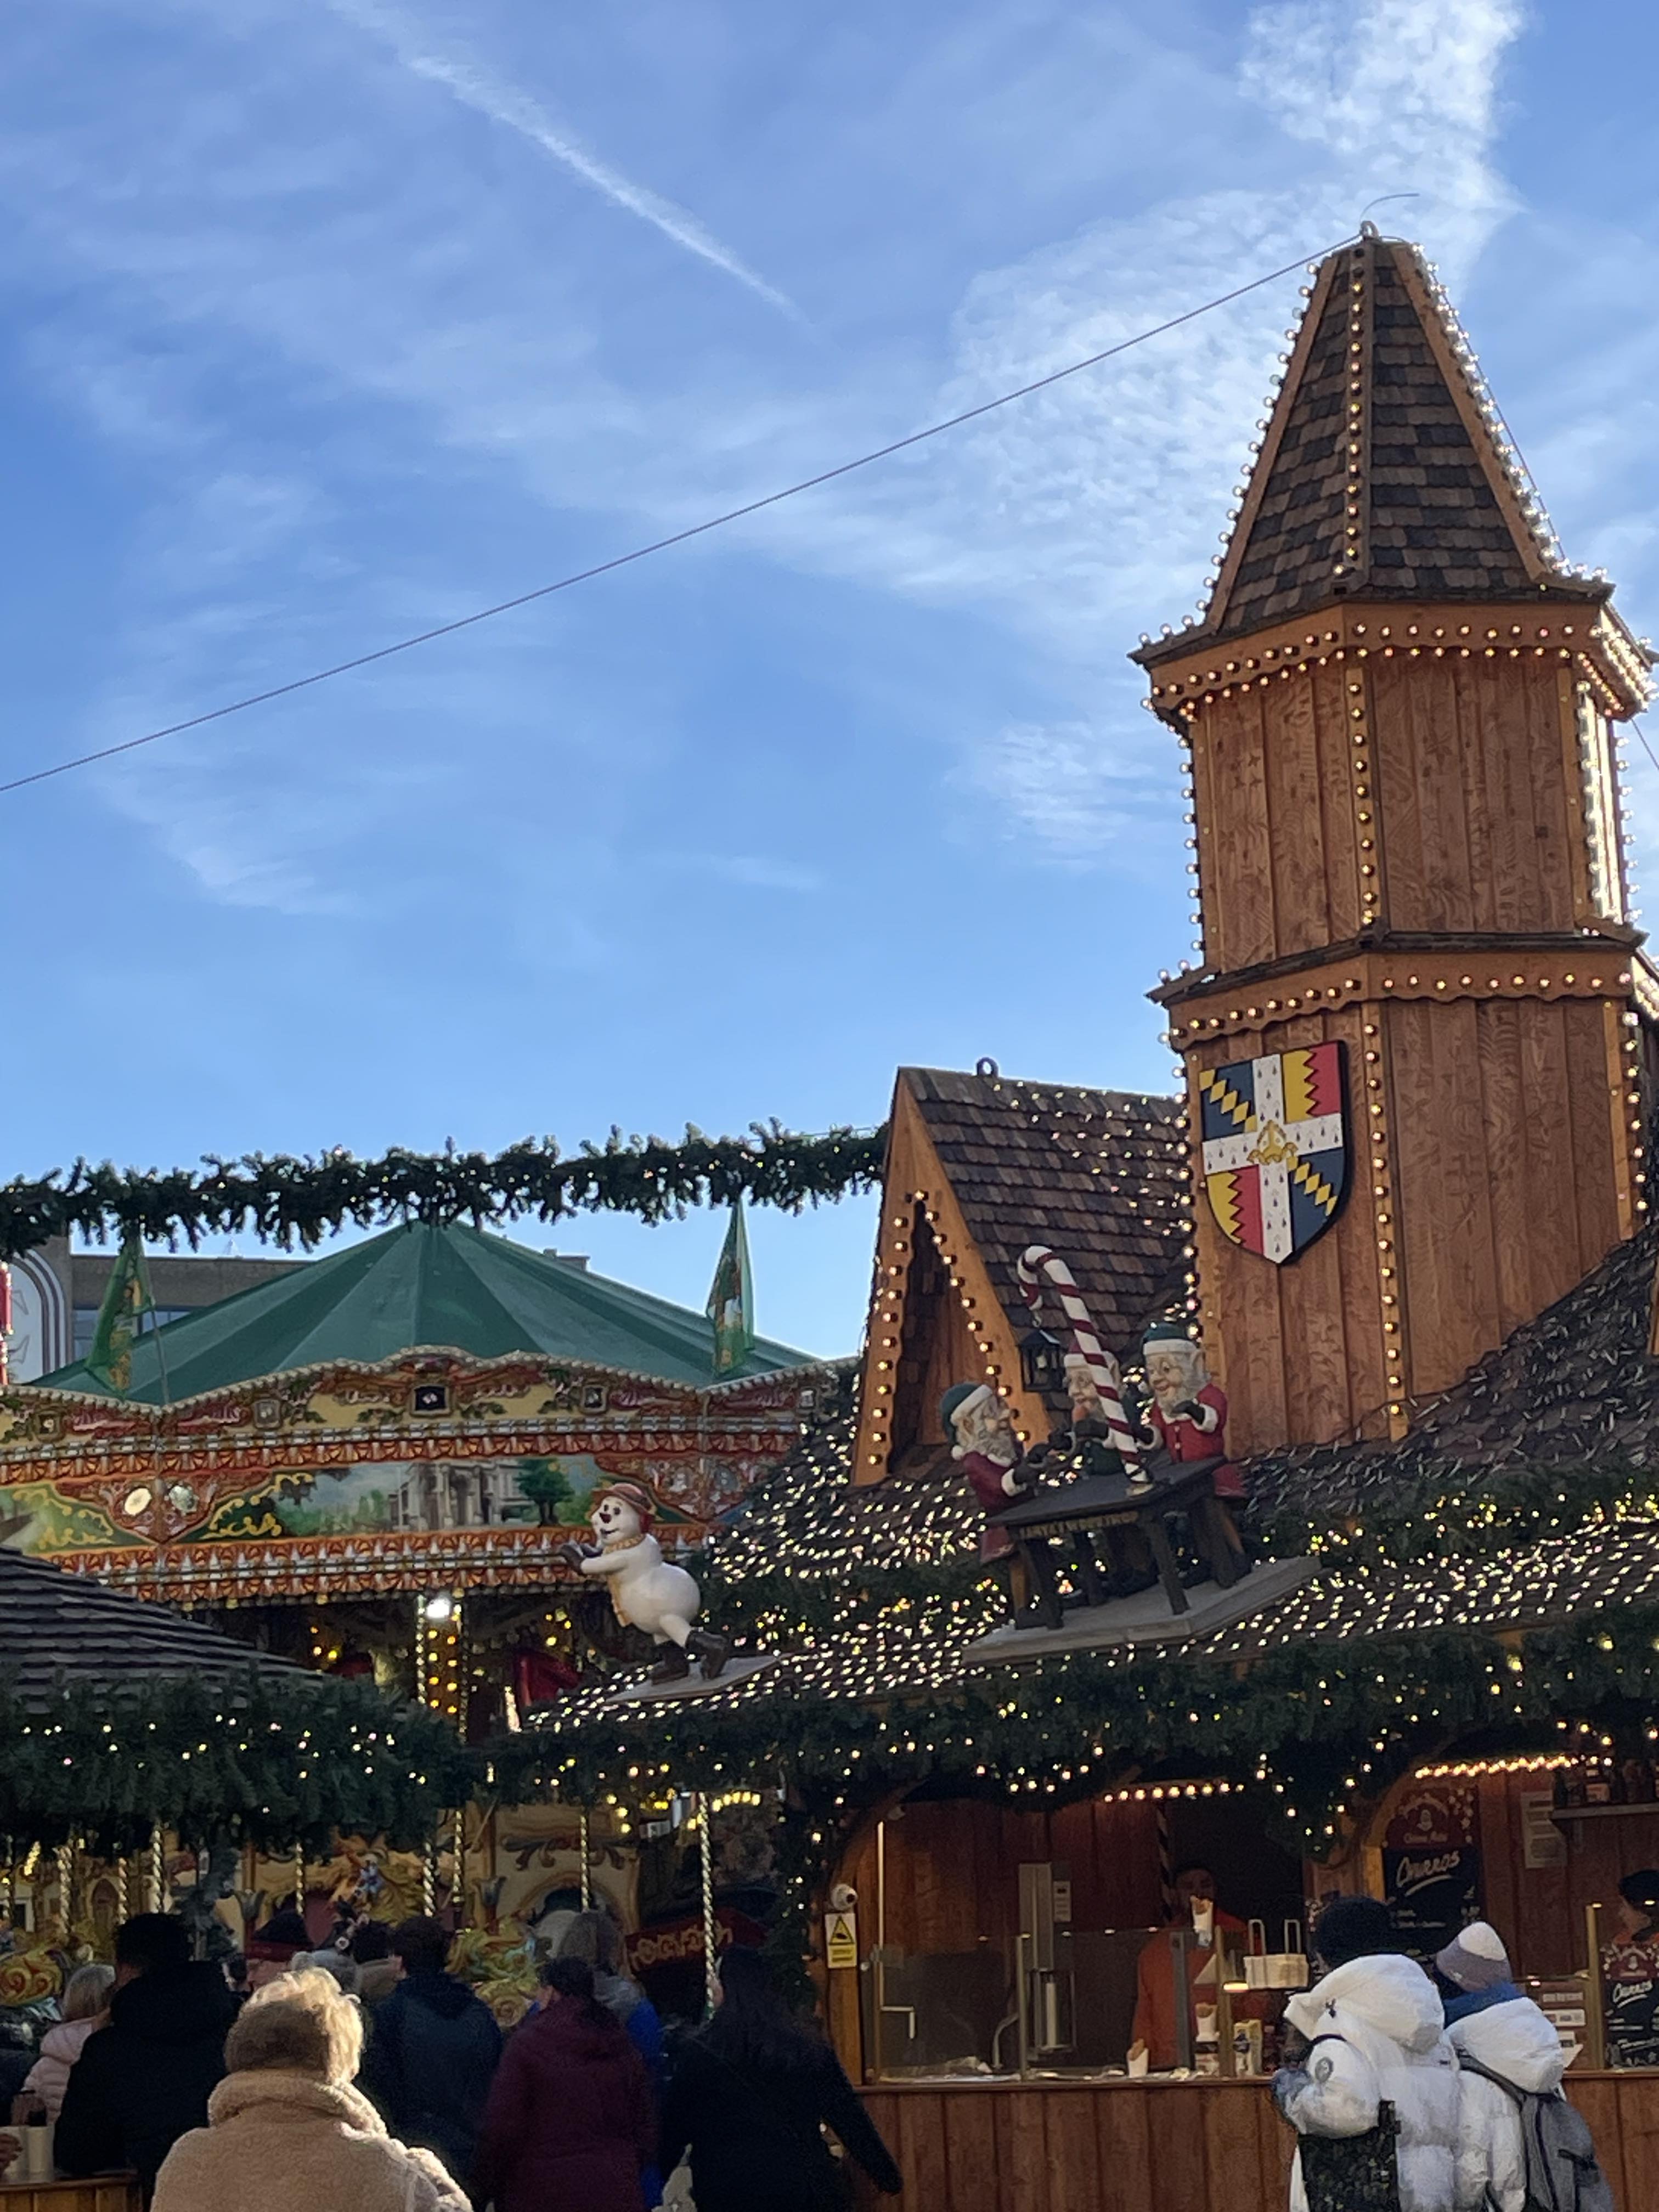 Birmingham's Frankfurt Christmas Market/Shopping/Leisure Day